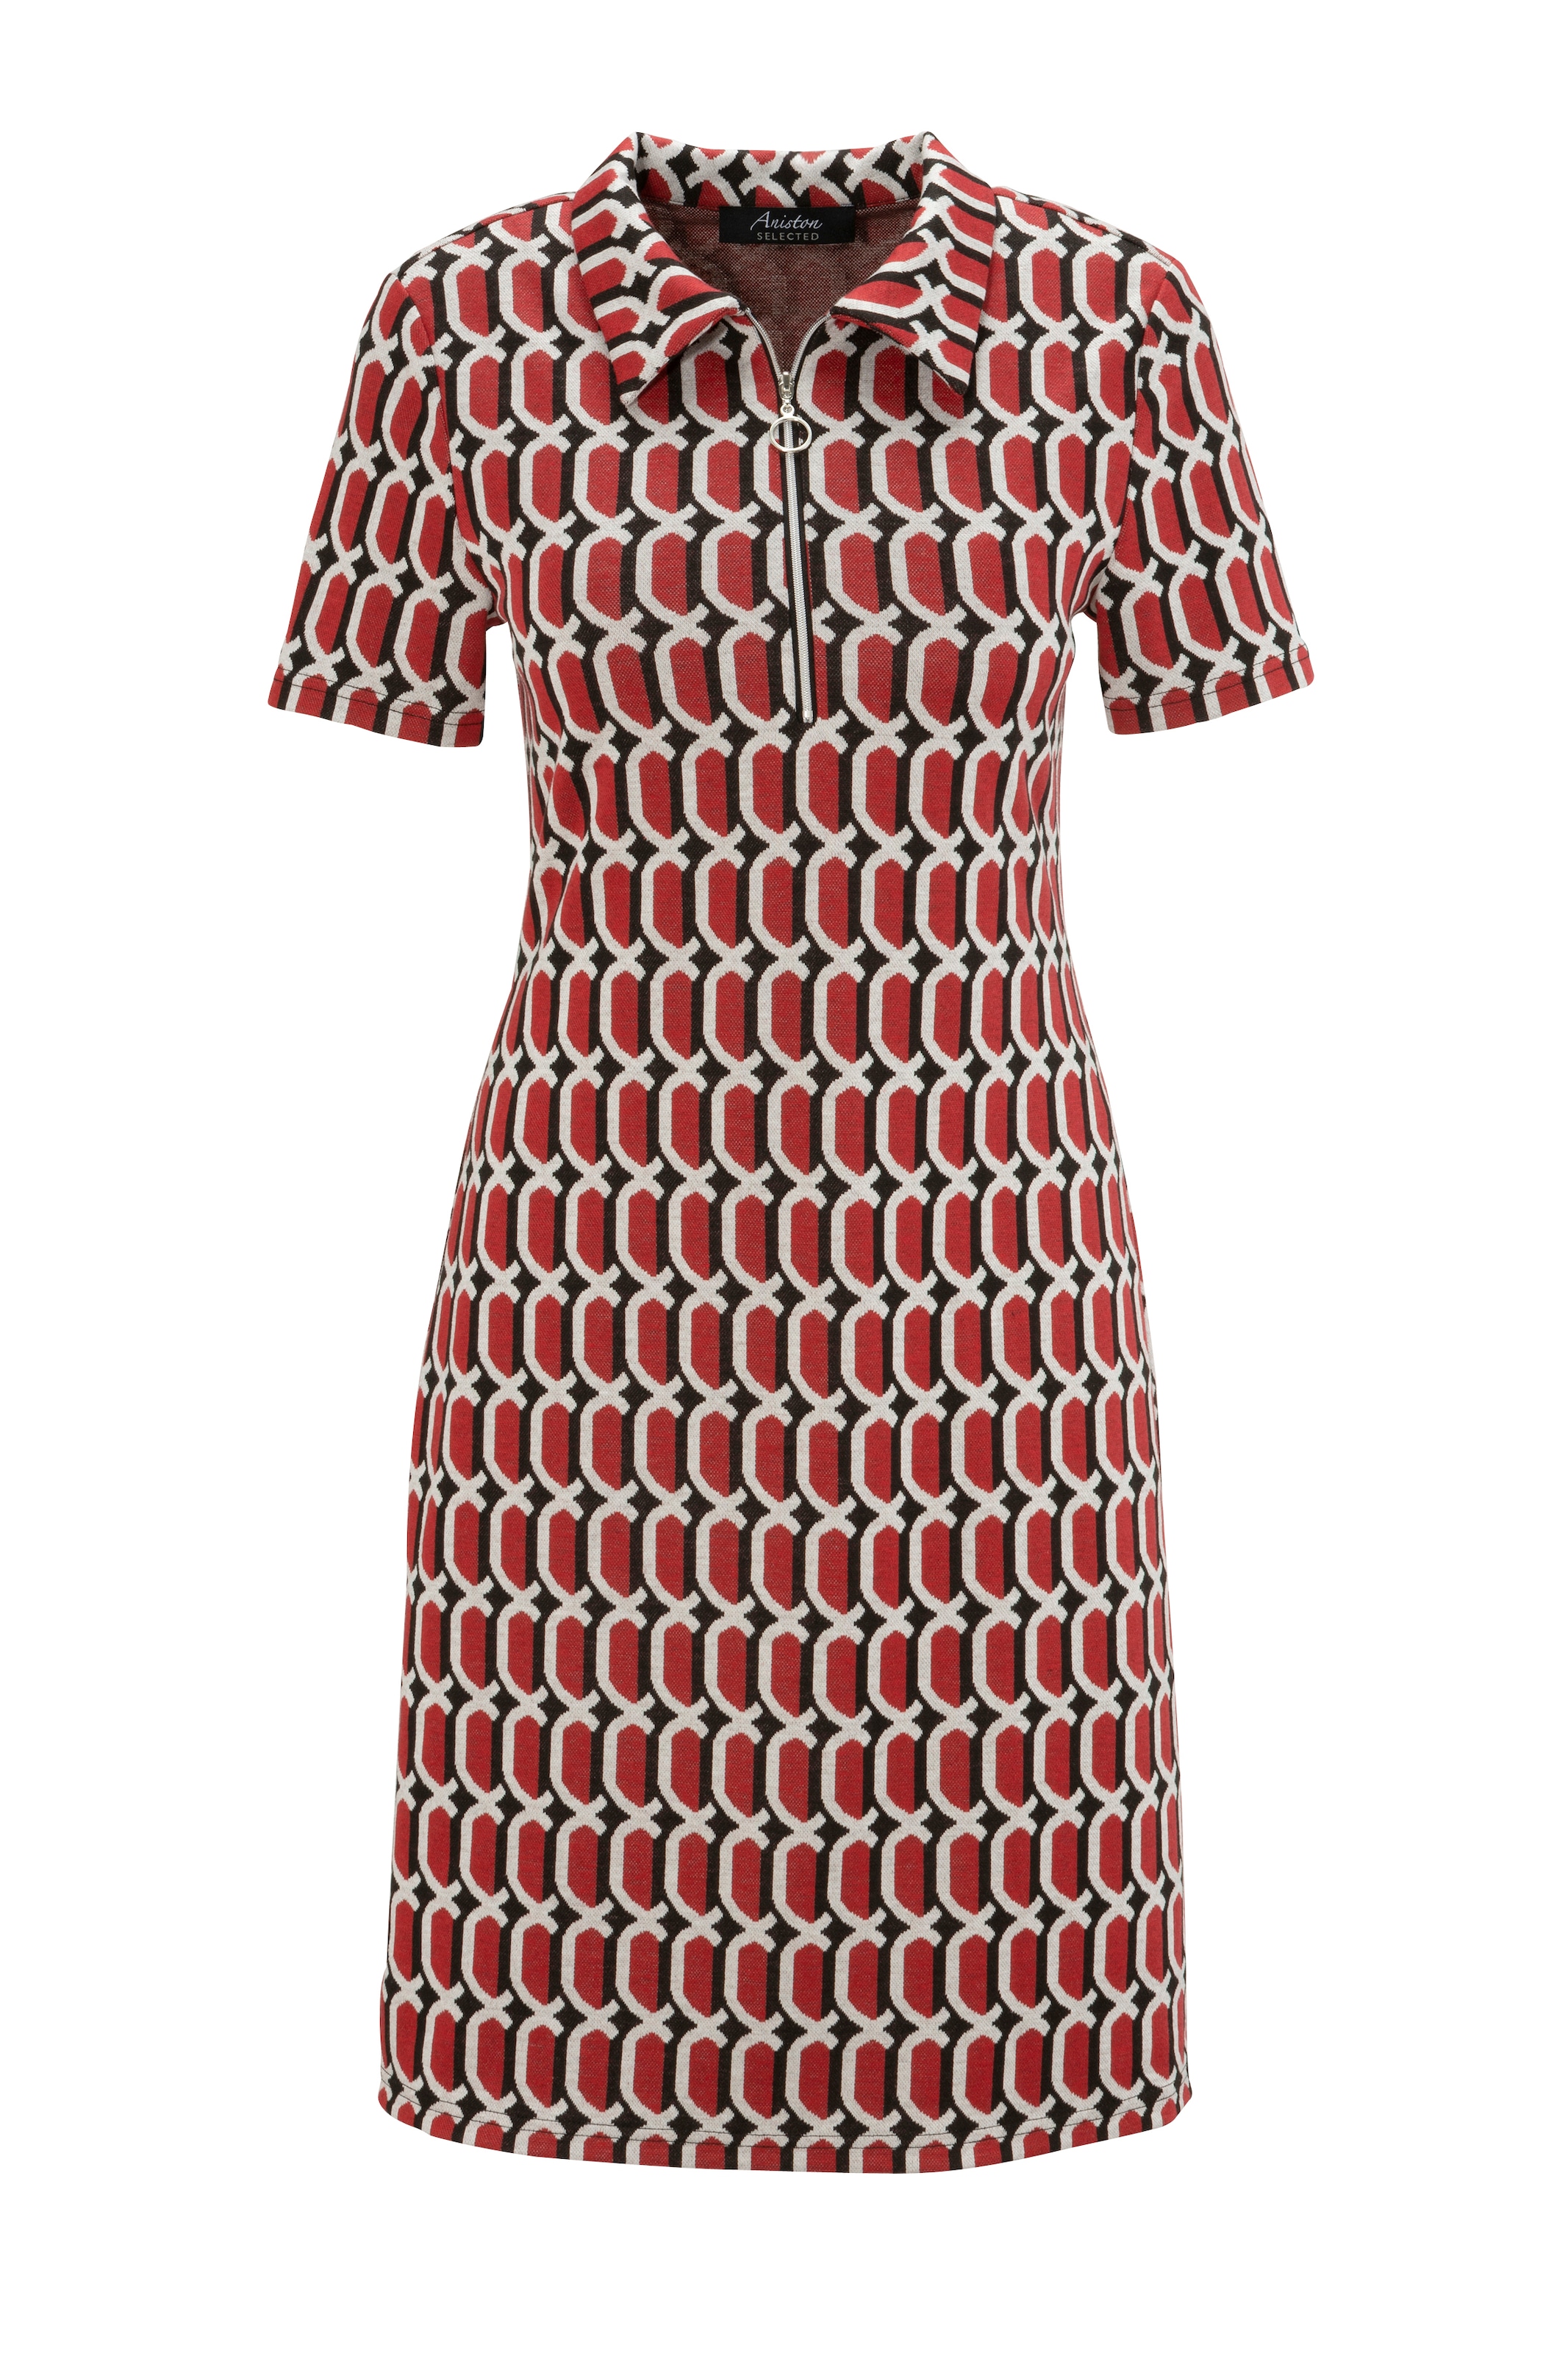 Aniston SELECTED Jerseykleid, mit silberfarbenem Reißverschluss - NEUE  KOLLEKTION kaufen